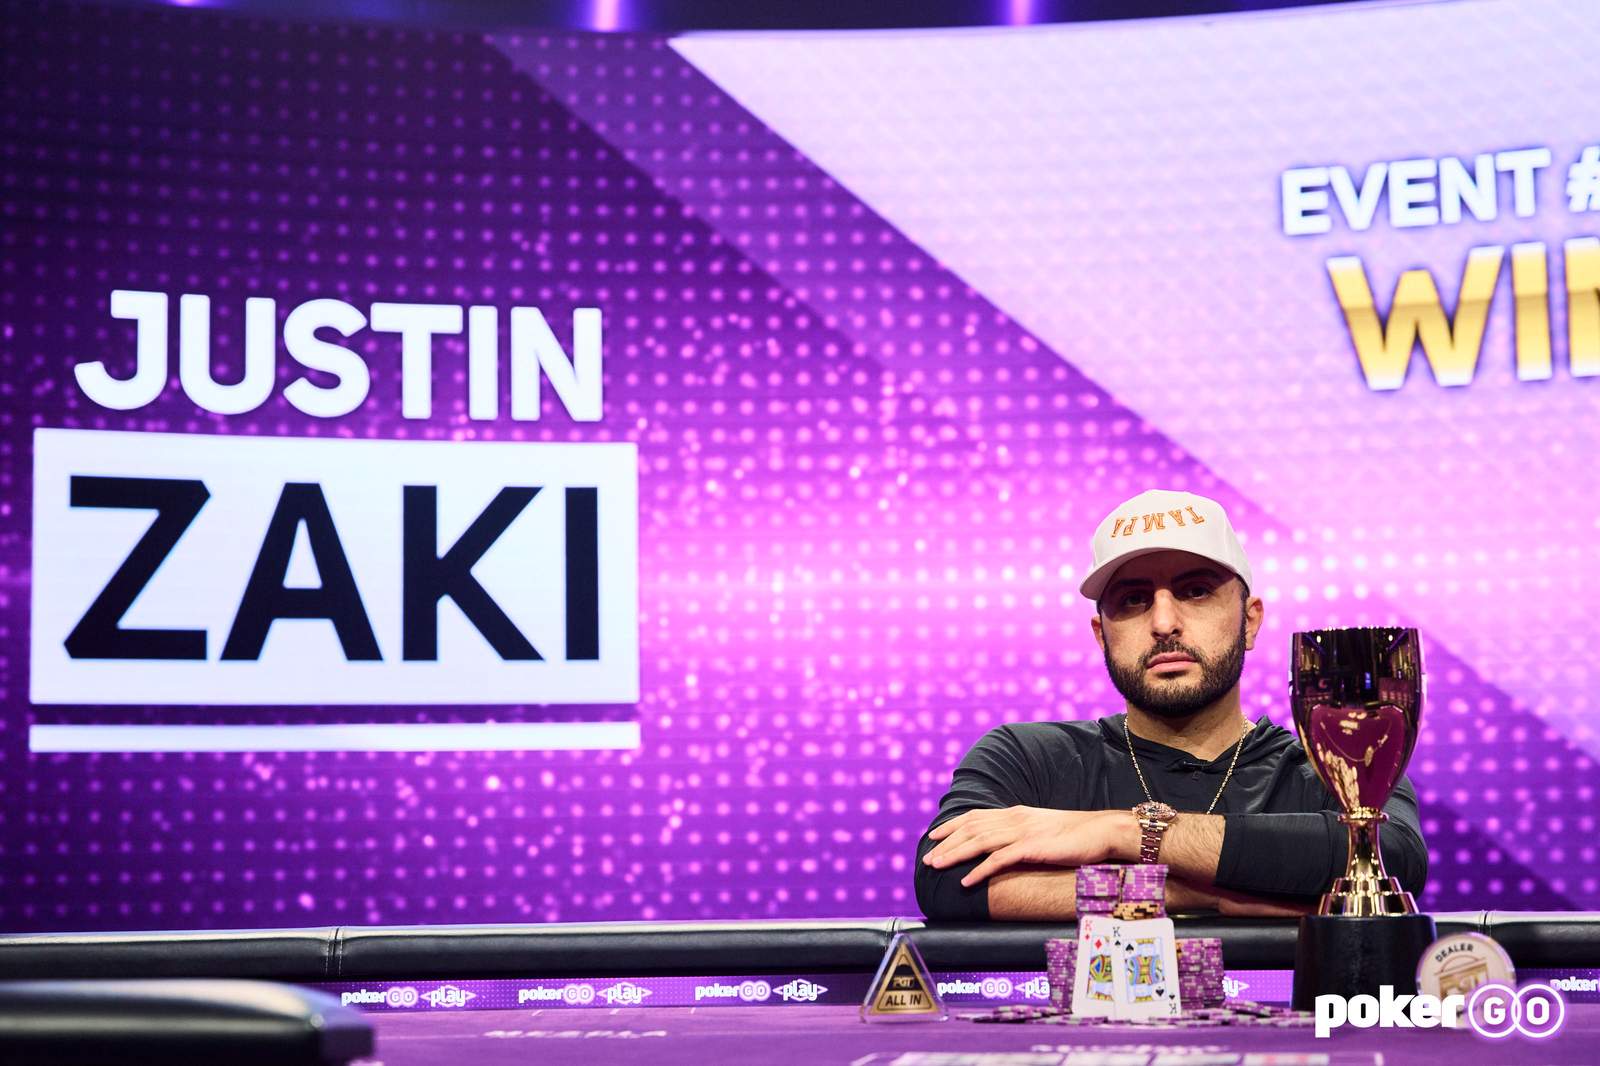 Justin Zaki Wins Event #5: $10,100 No-Limit Hold'em for $232,400